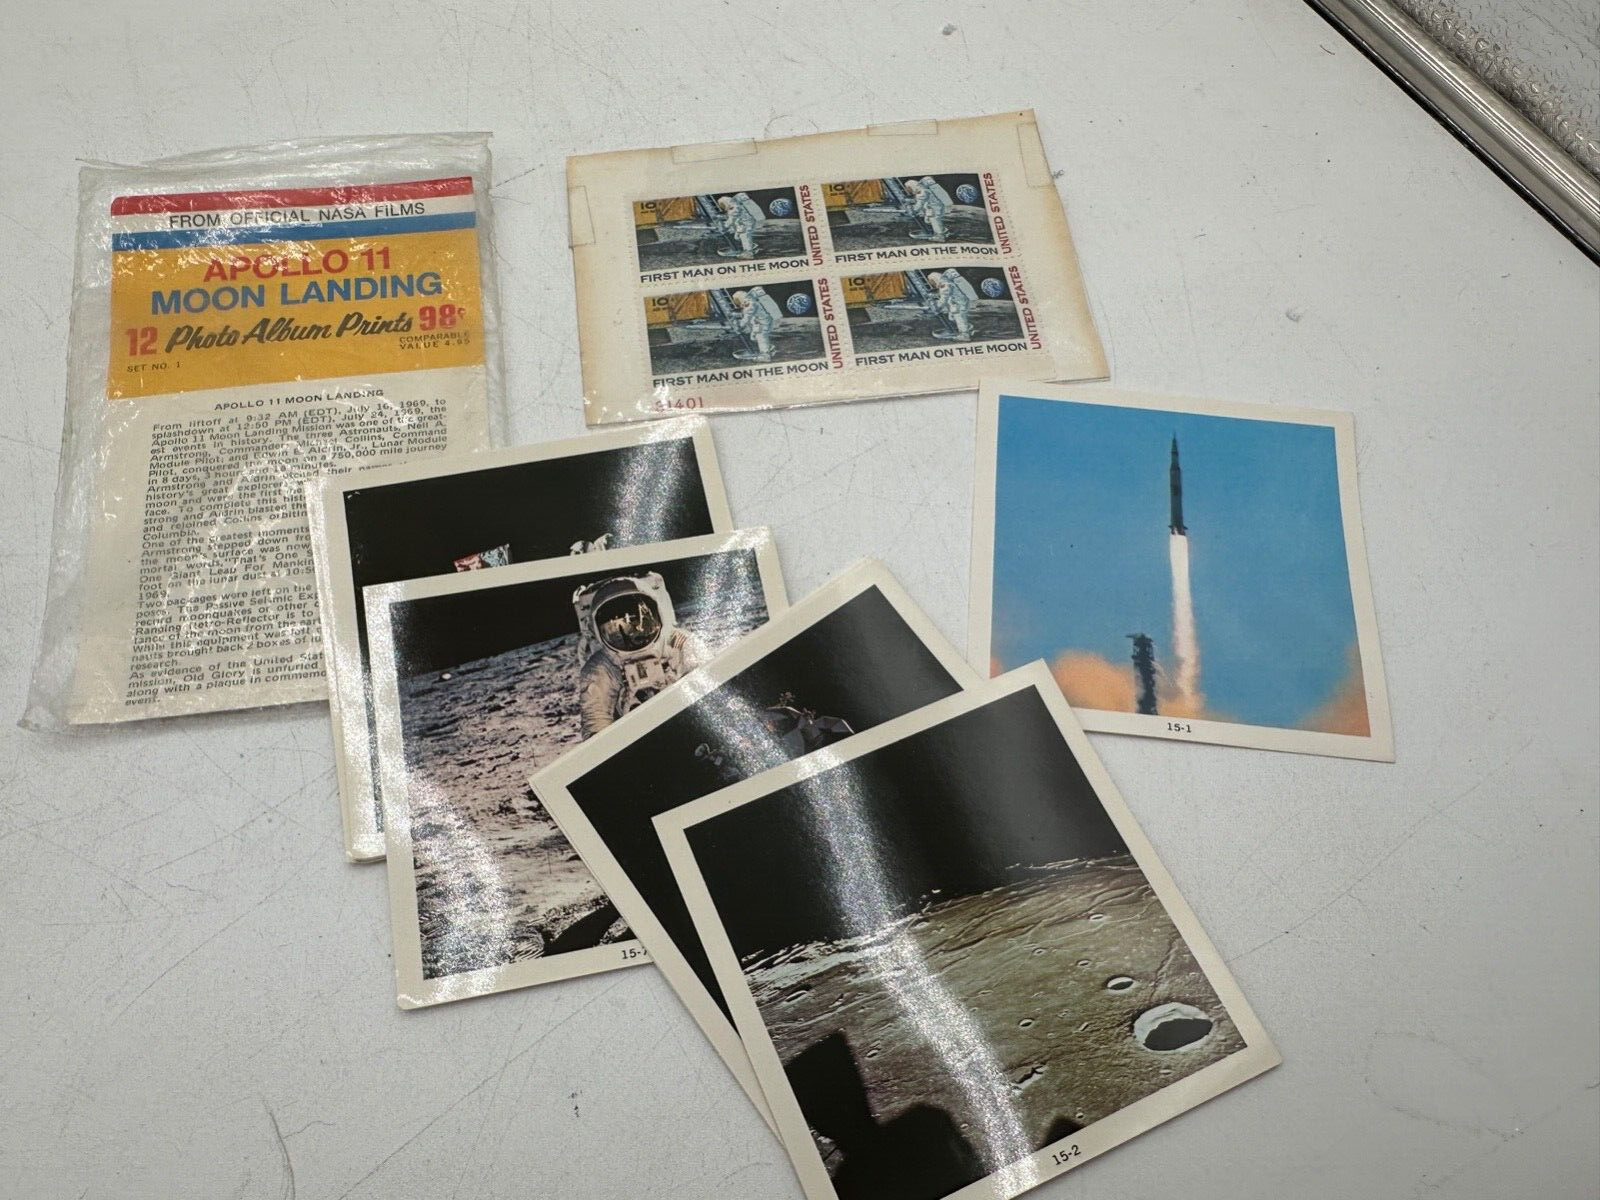 Apollo 11 Moon Landing Official NASA Films 12 Color Photo Album Prints & Stamps